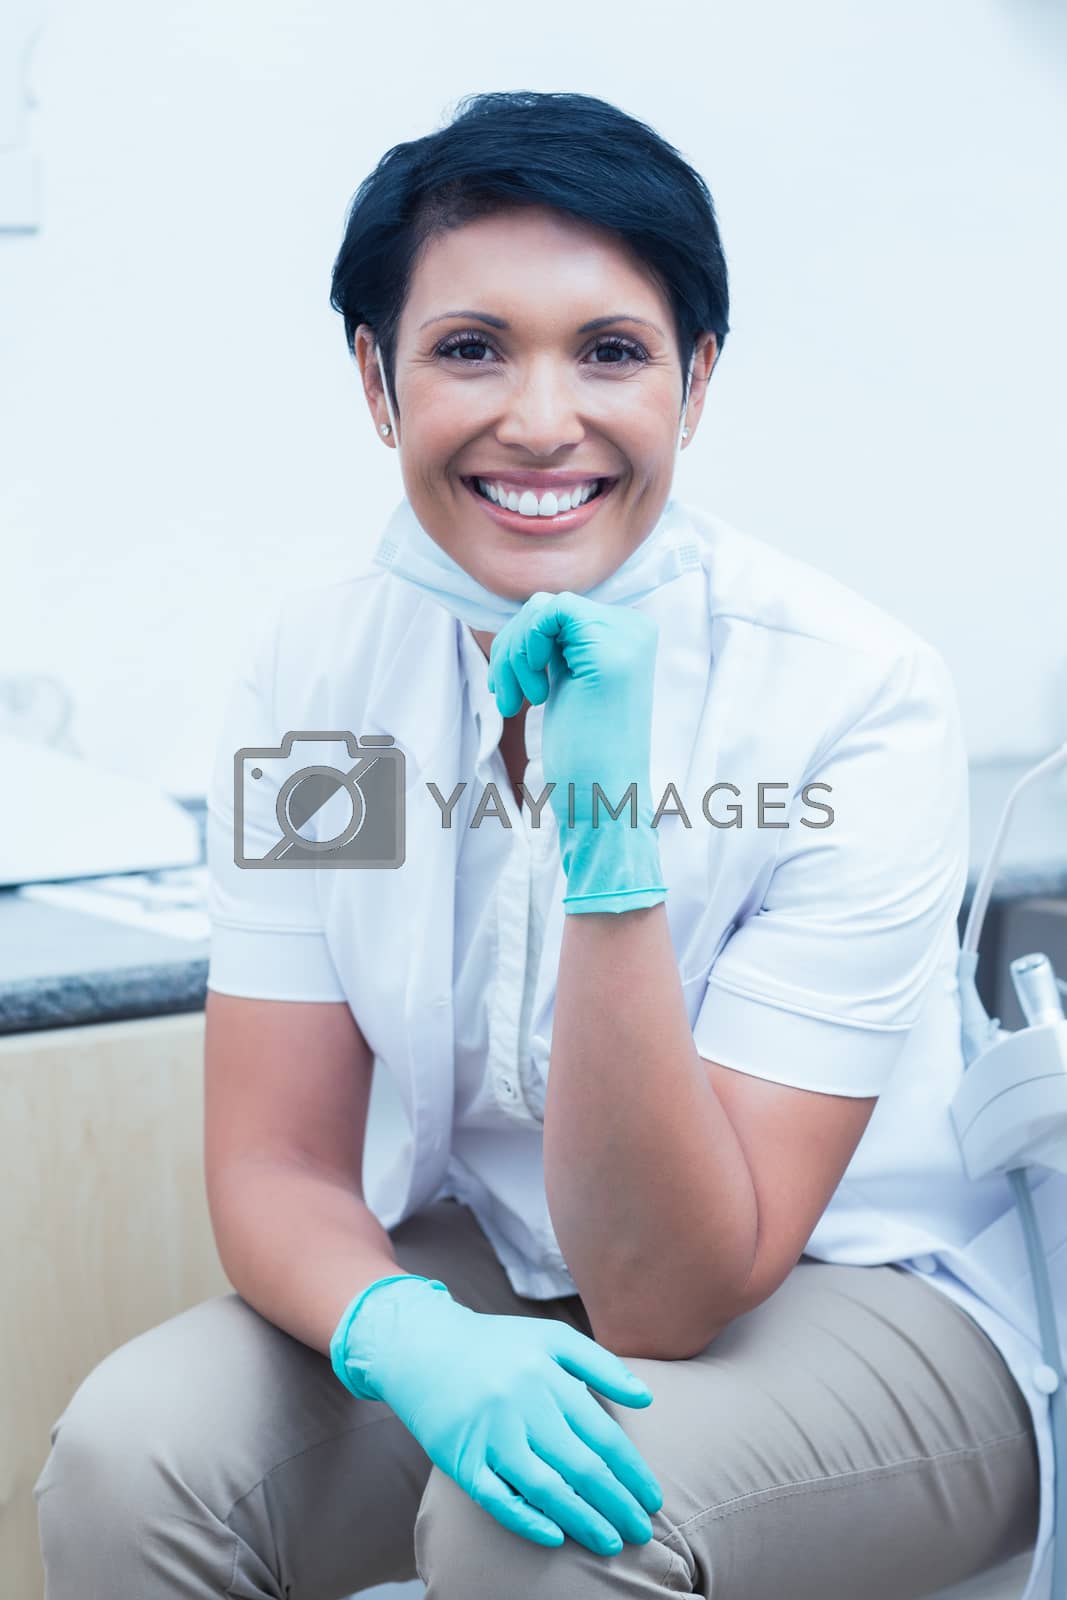 Royalty free image of Portrait of confident female dentist by Wavebreakmedia